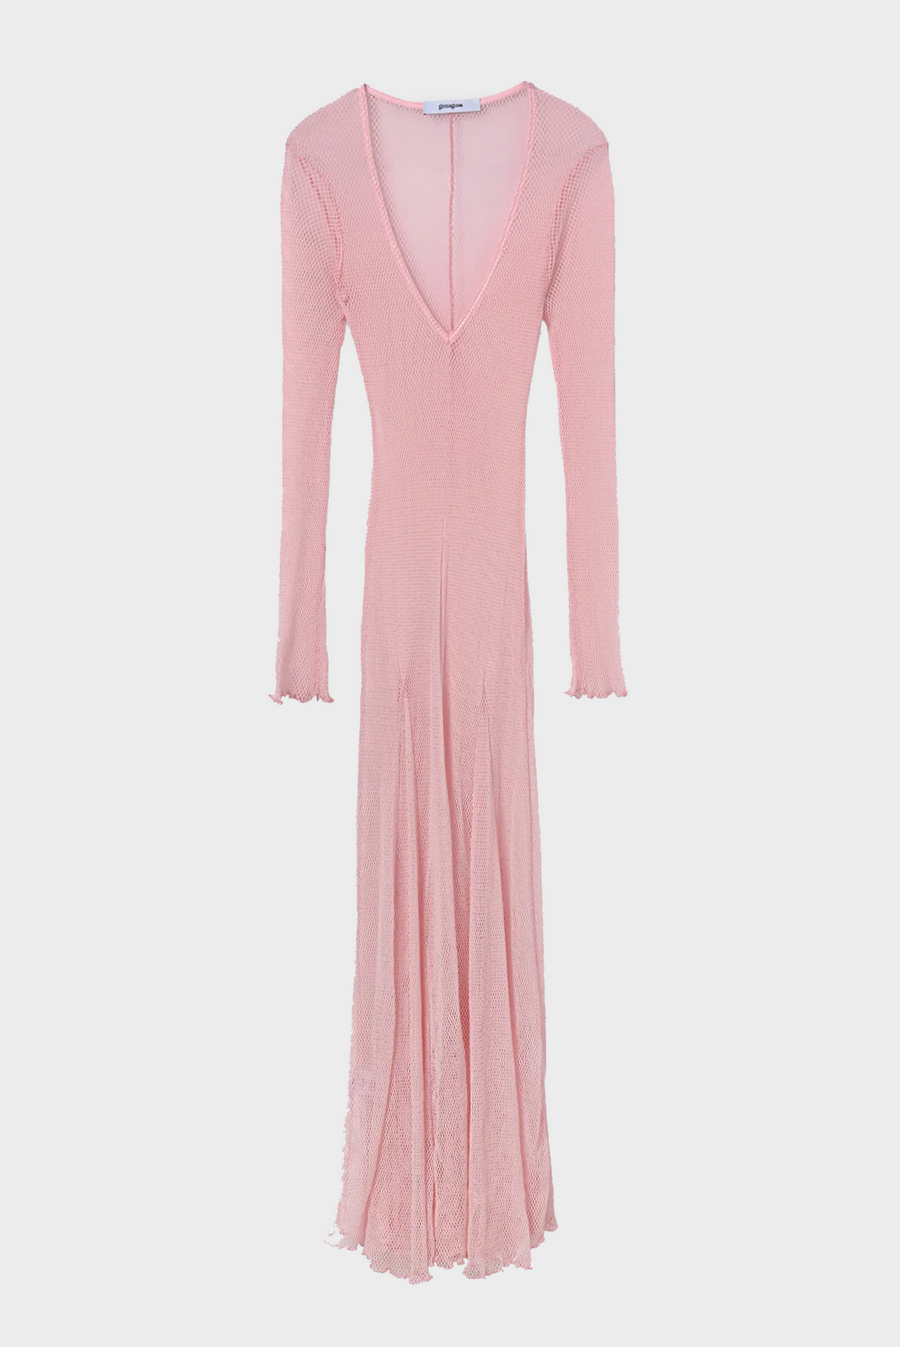 Gimaguas - Rete Dress -  Pink